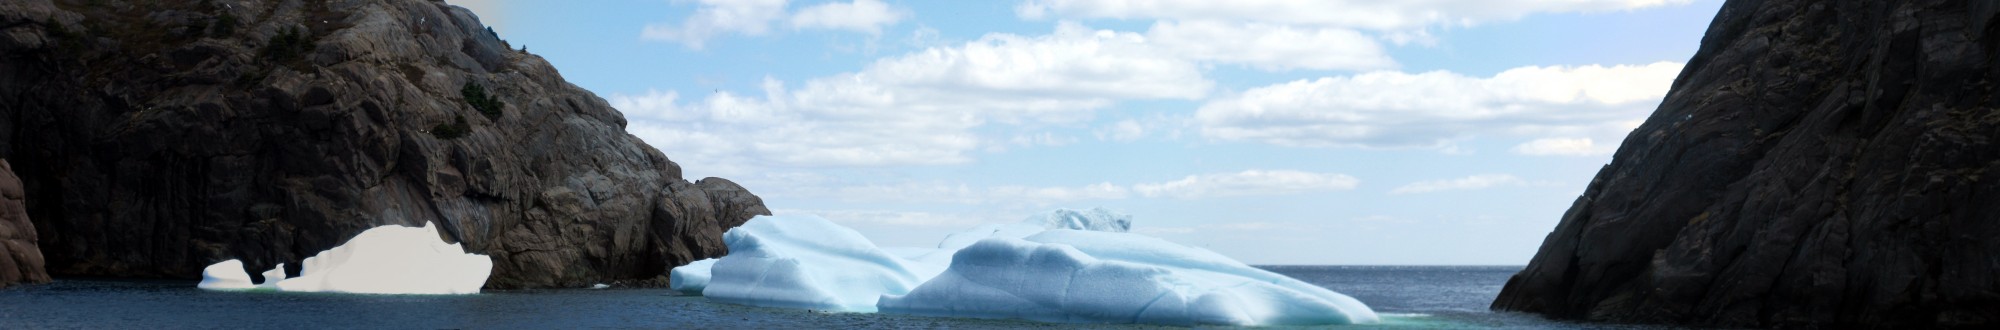 Iceberg - Quidi Vidi Bay - 29 Apr 2012